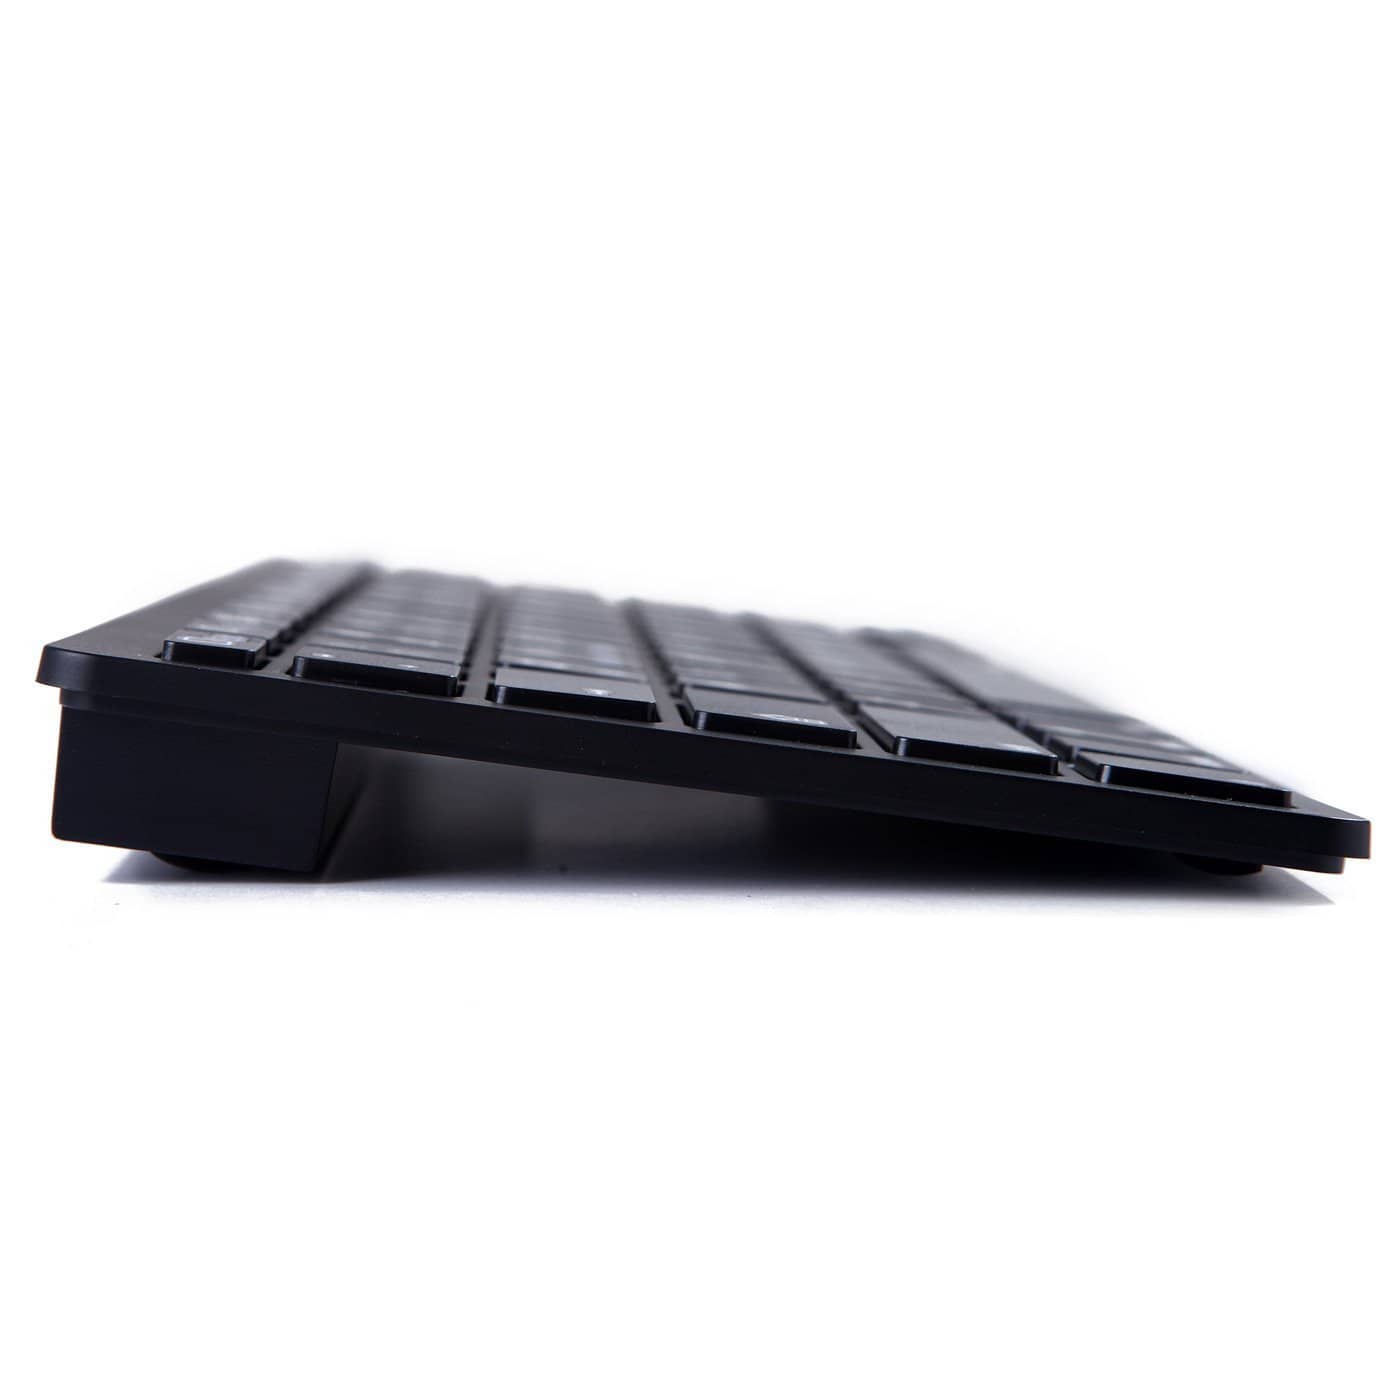 HDE Mini Aluminum Bluetooth 3.0 Wireless Multimedia Keyboard - Black